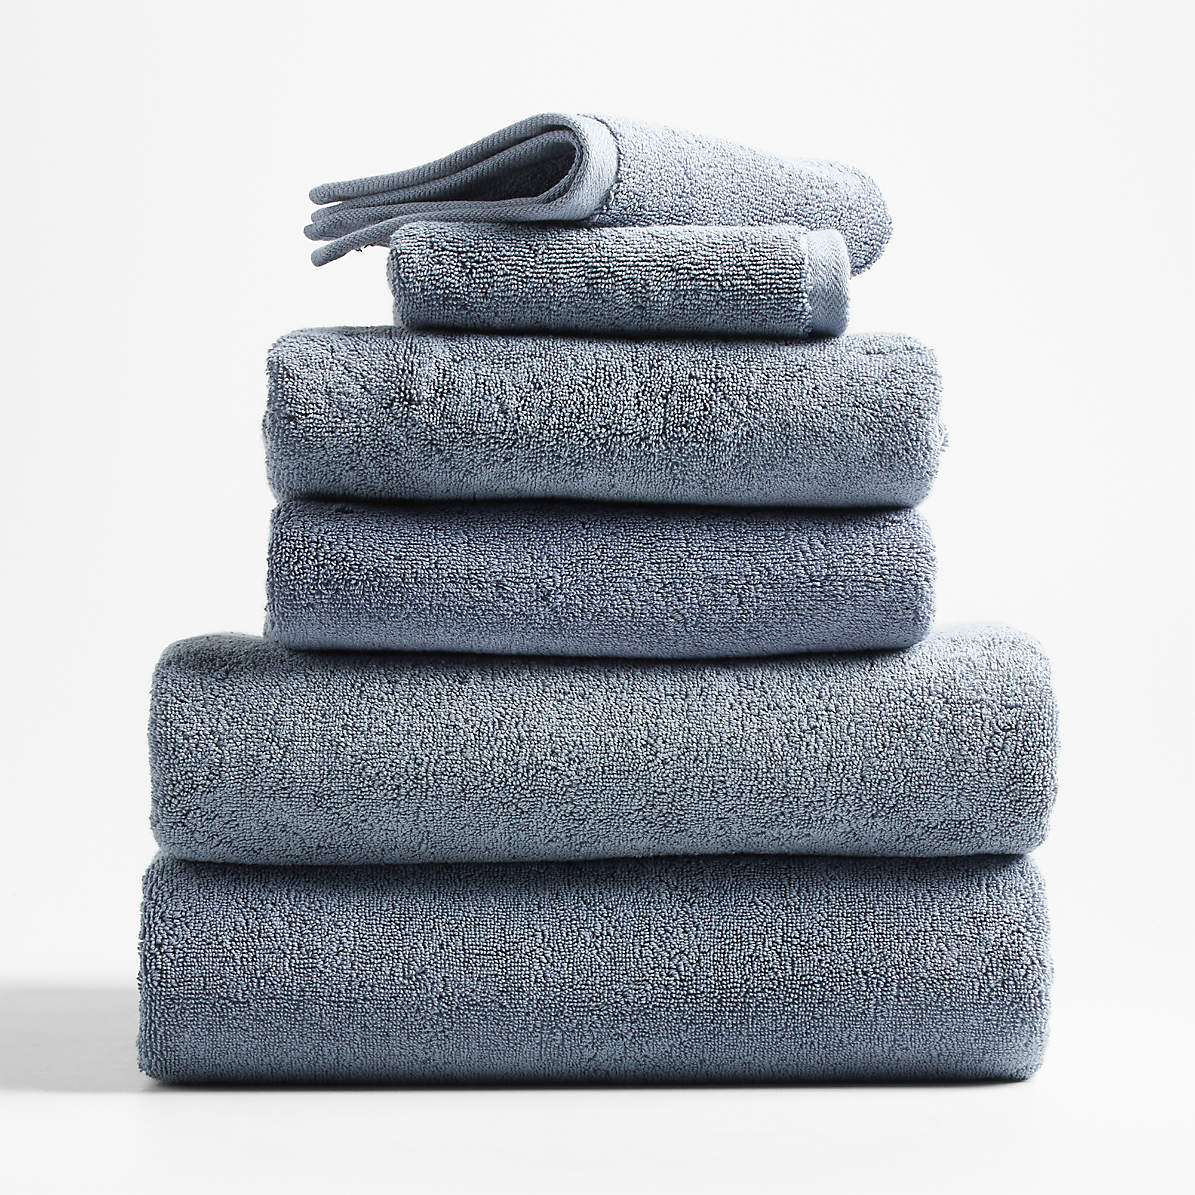 Evening Blue Organic Turkish Cotton Bath Towels, Set of 6 +